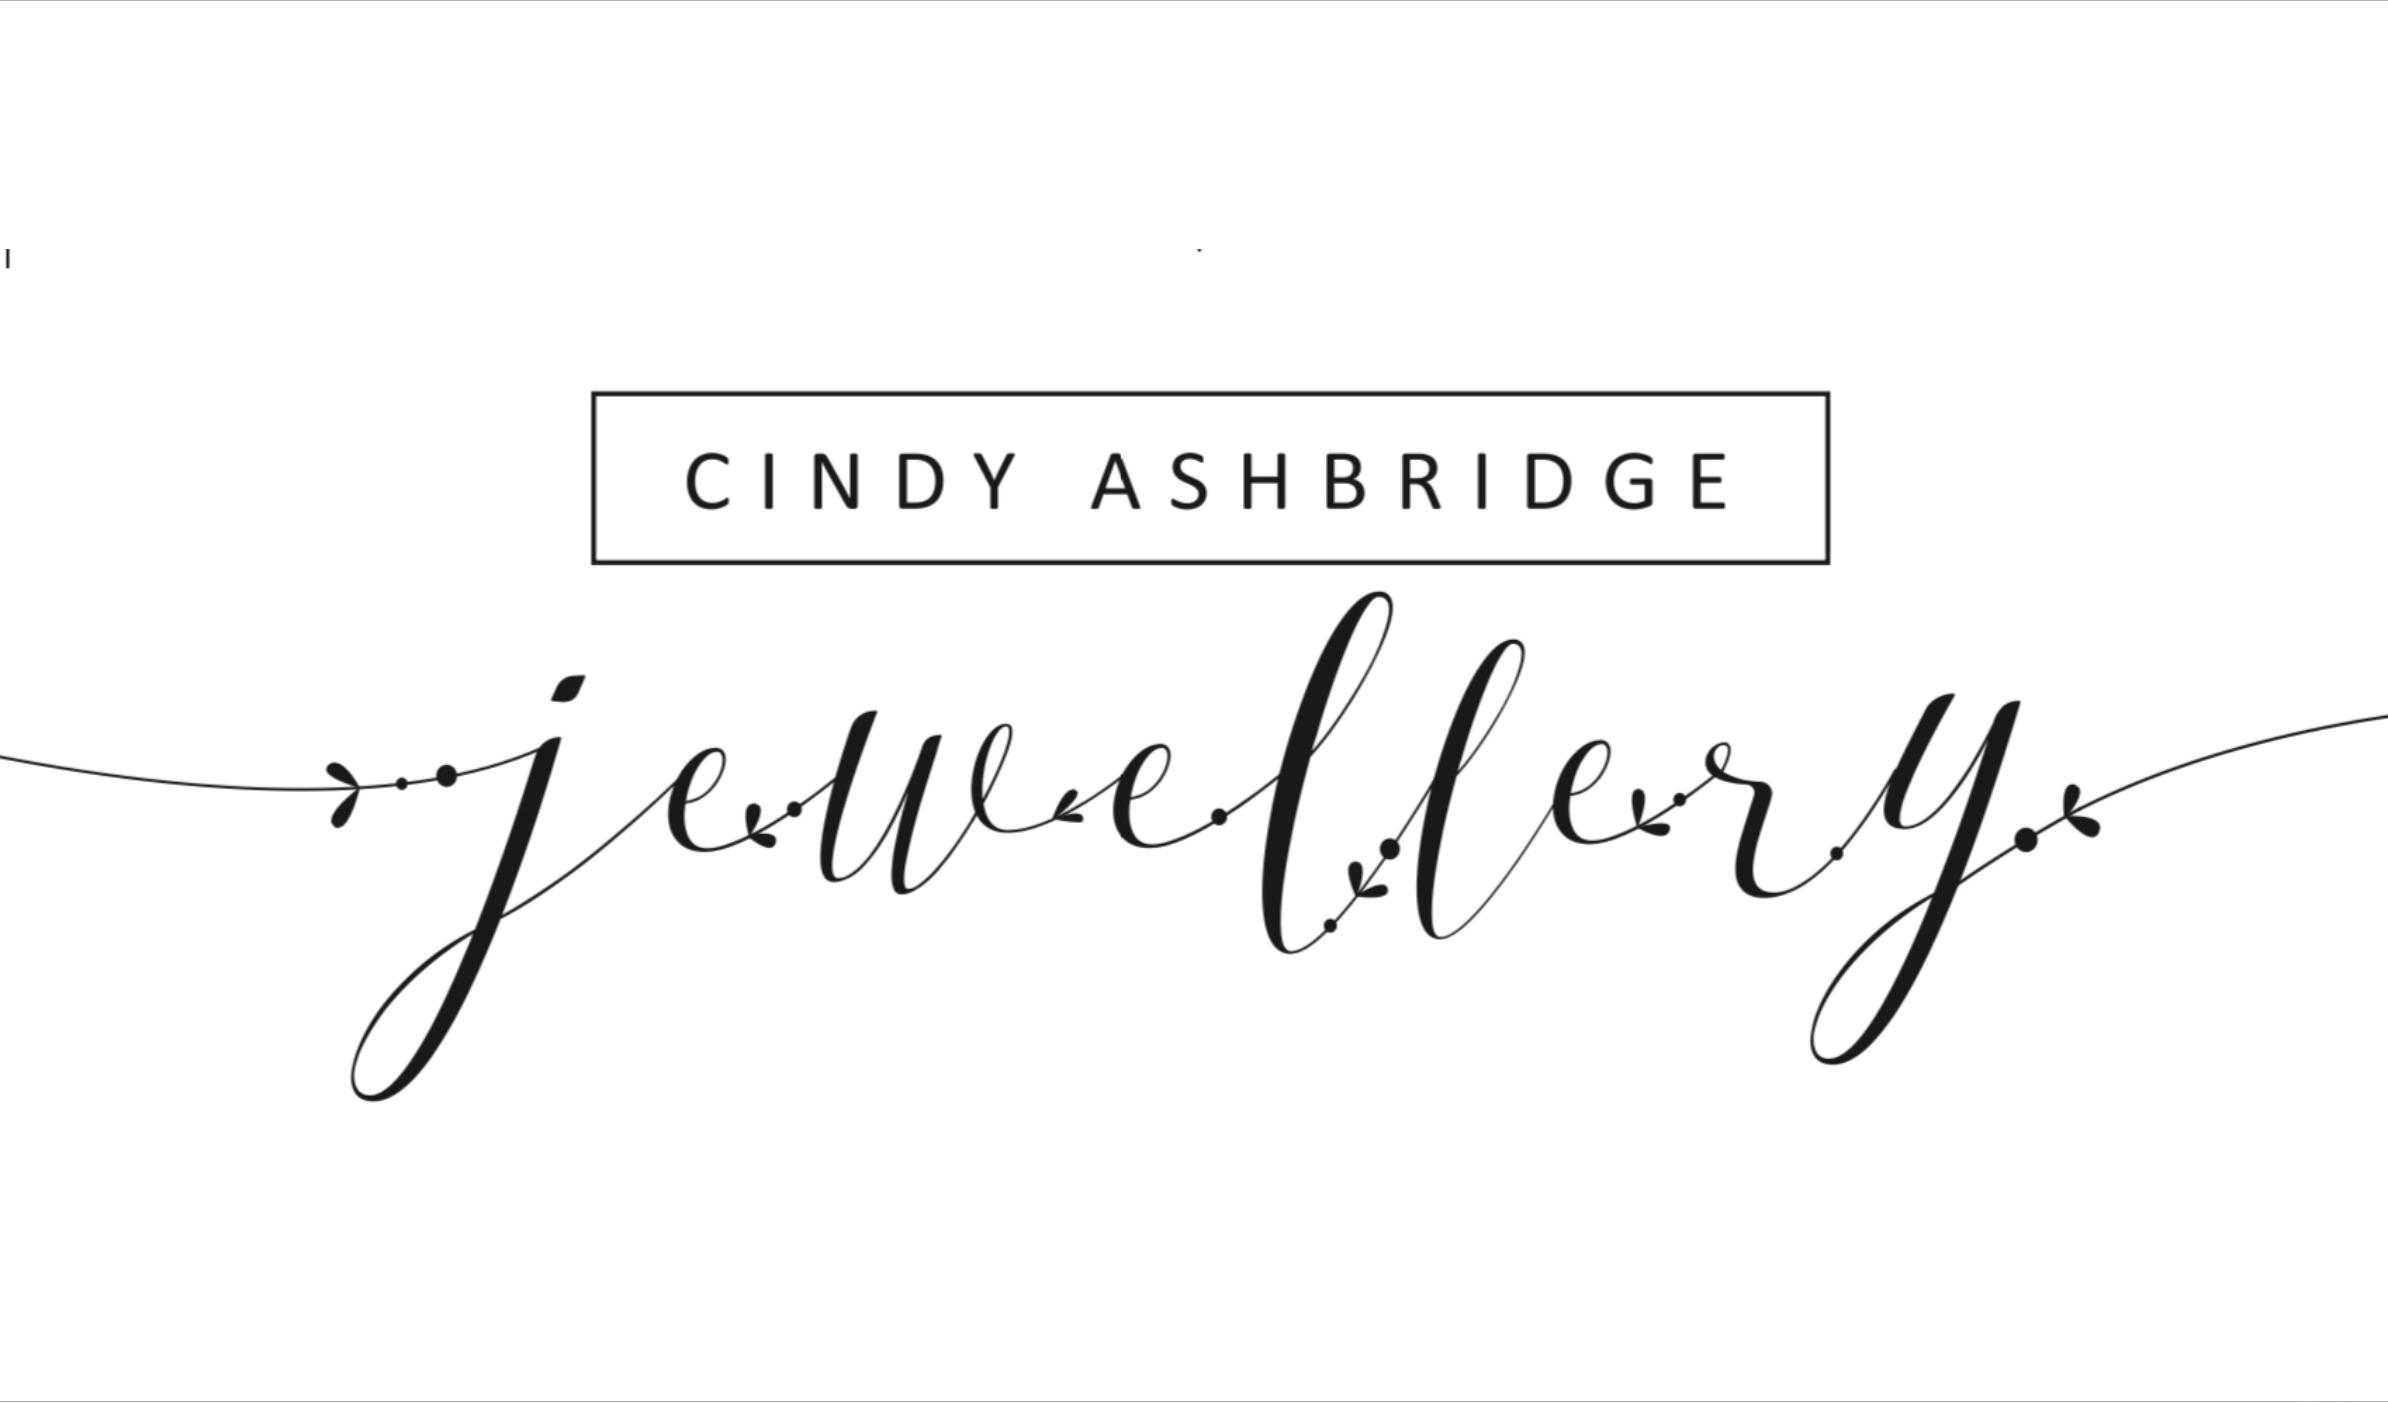 Cindy Ashbridge Jewellery